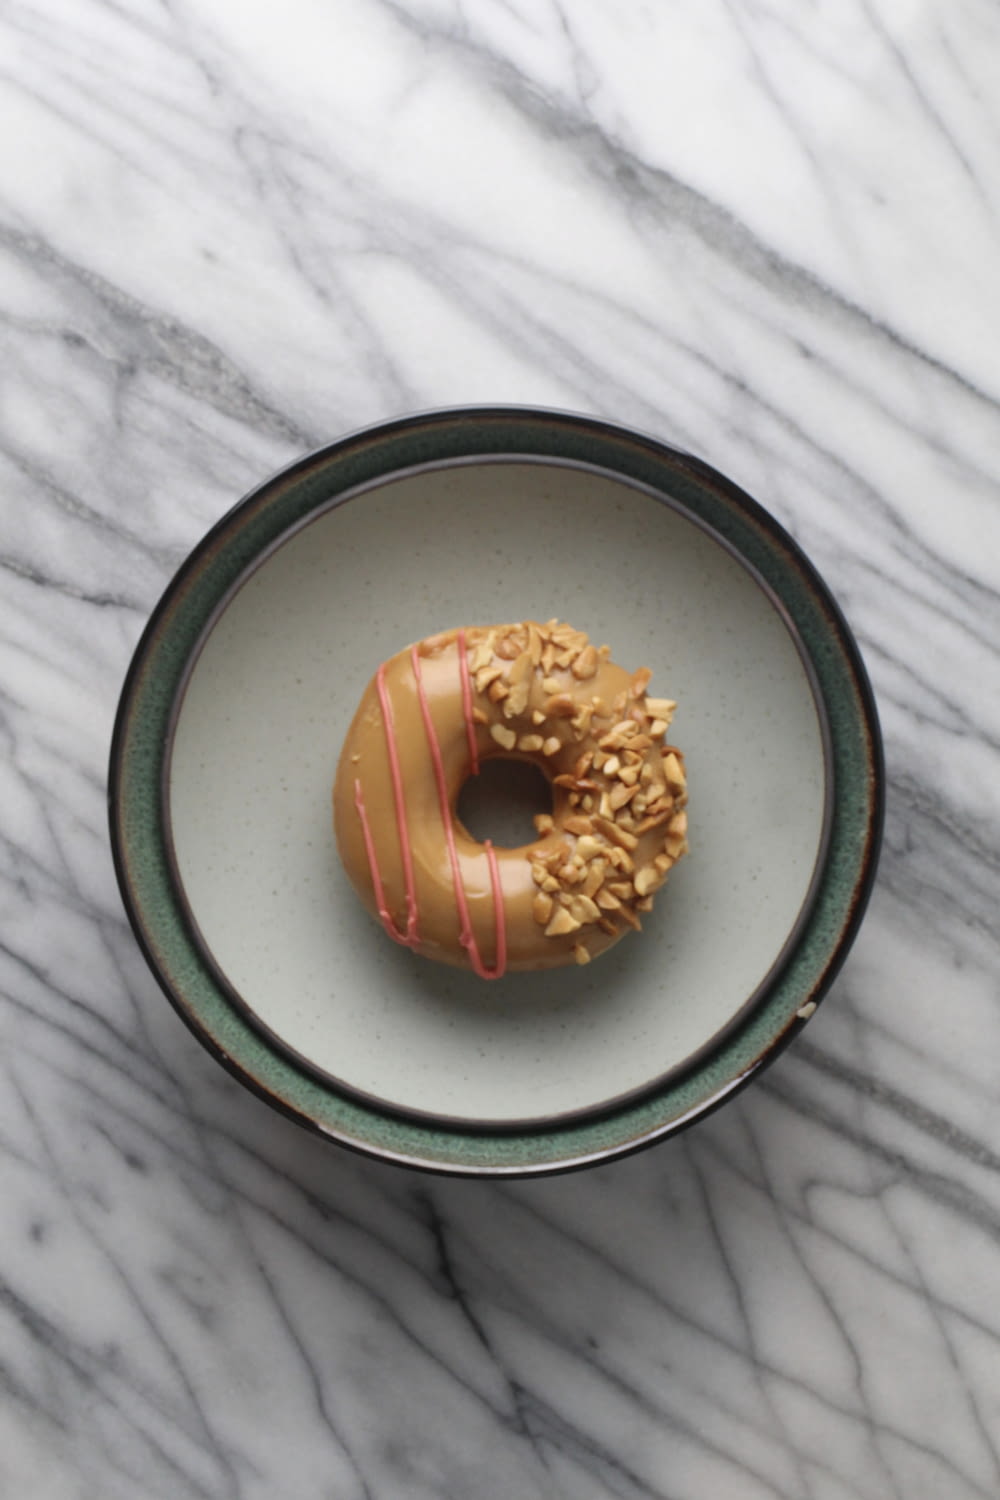 a glazed donut with sprinkles on a plate